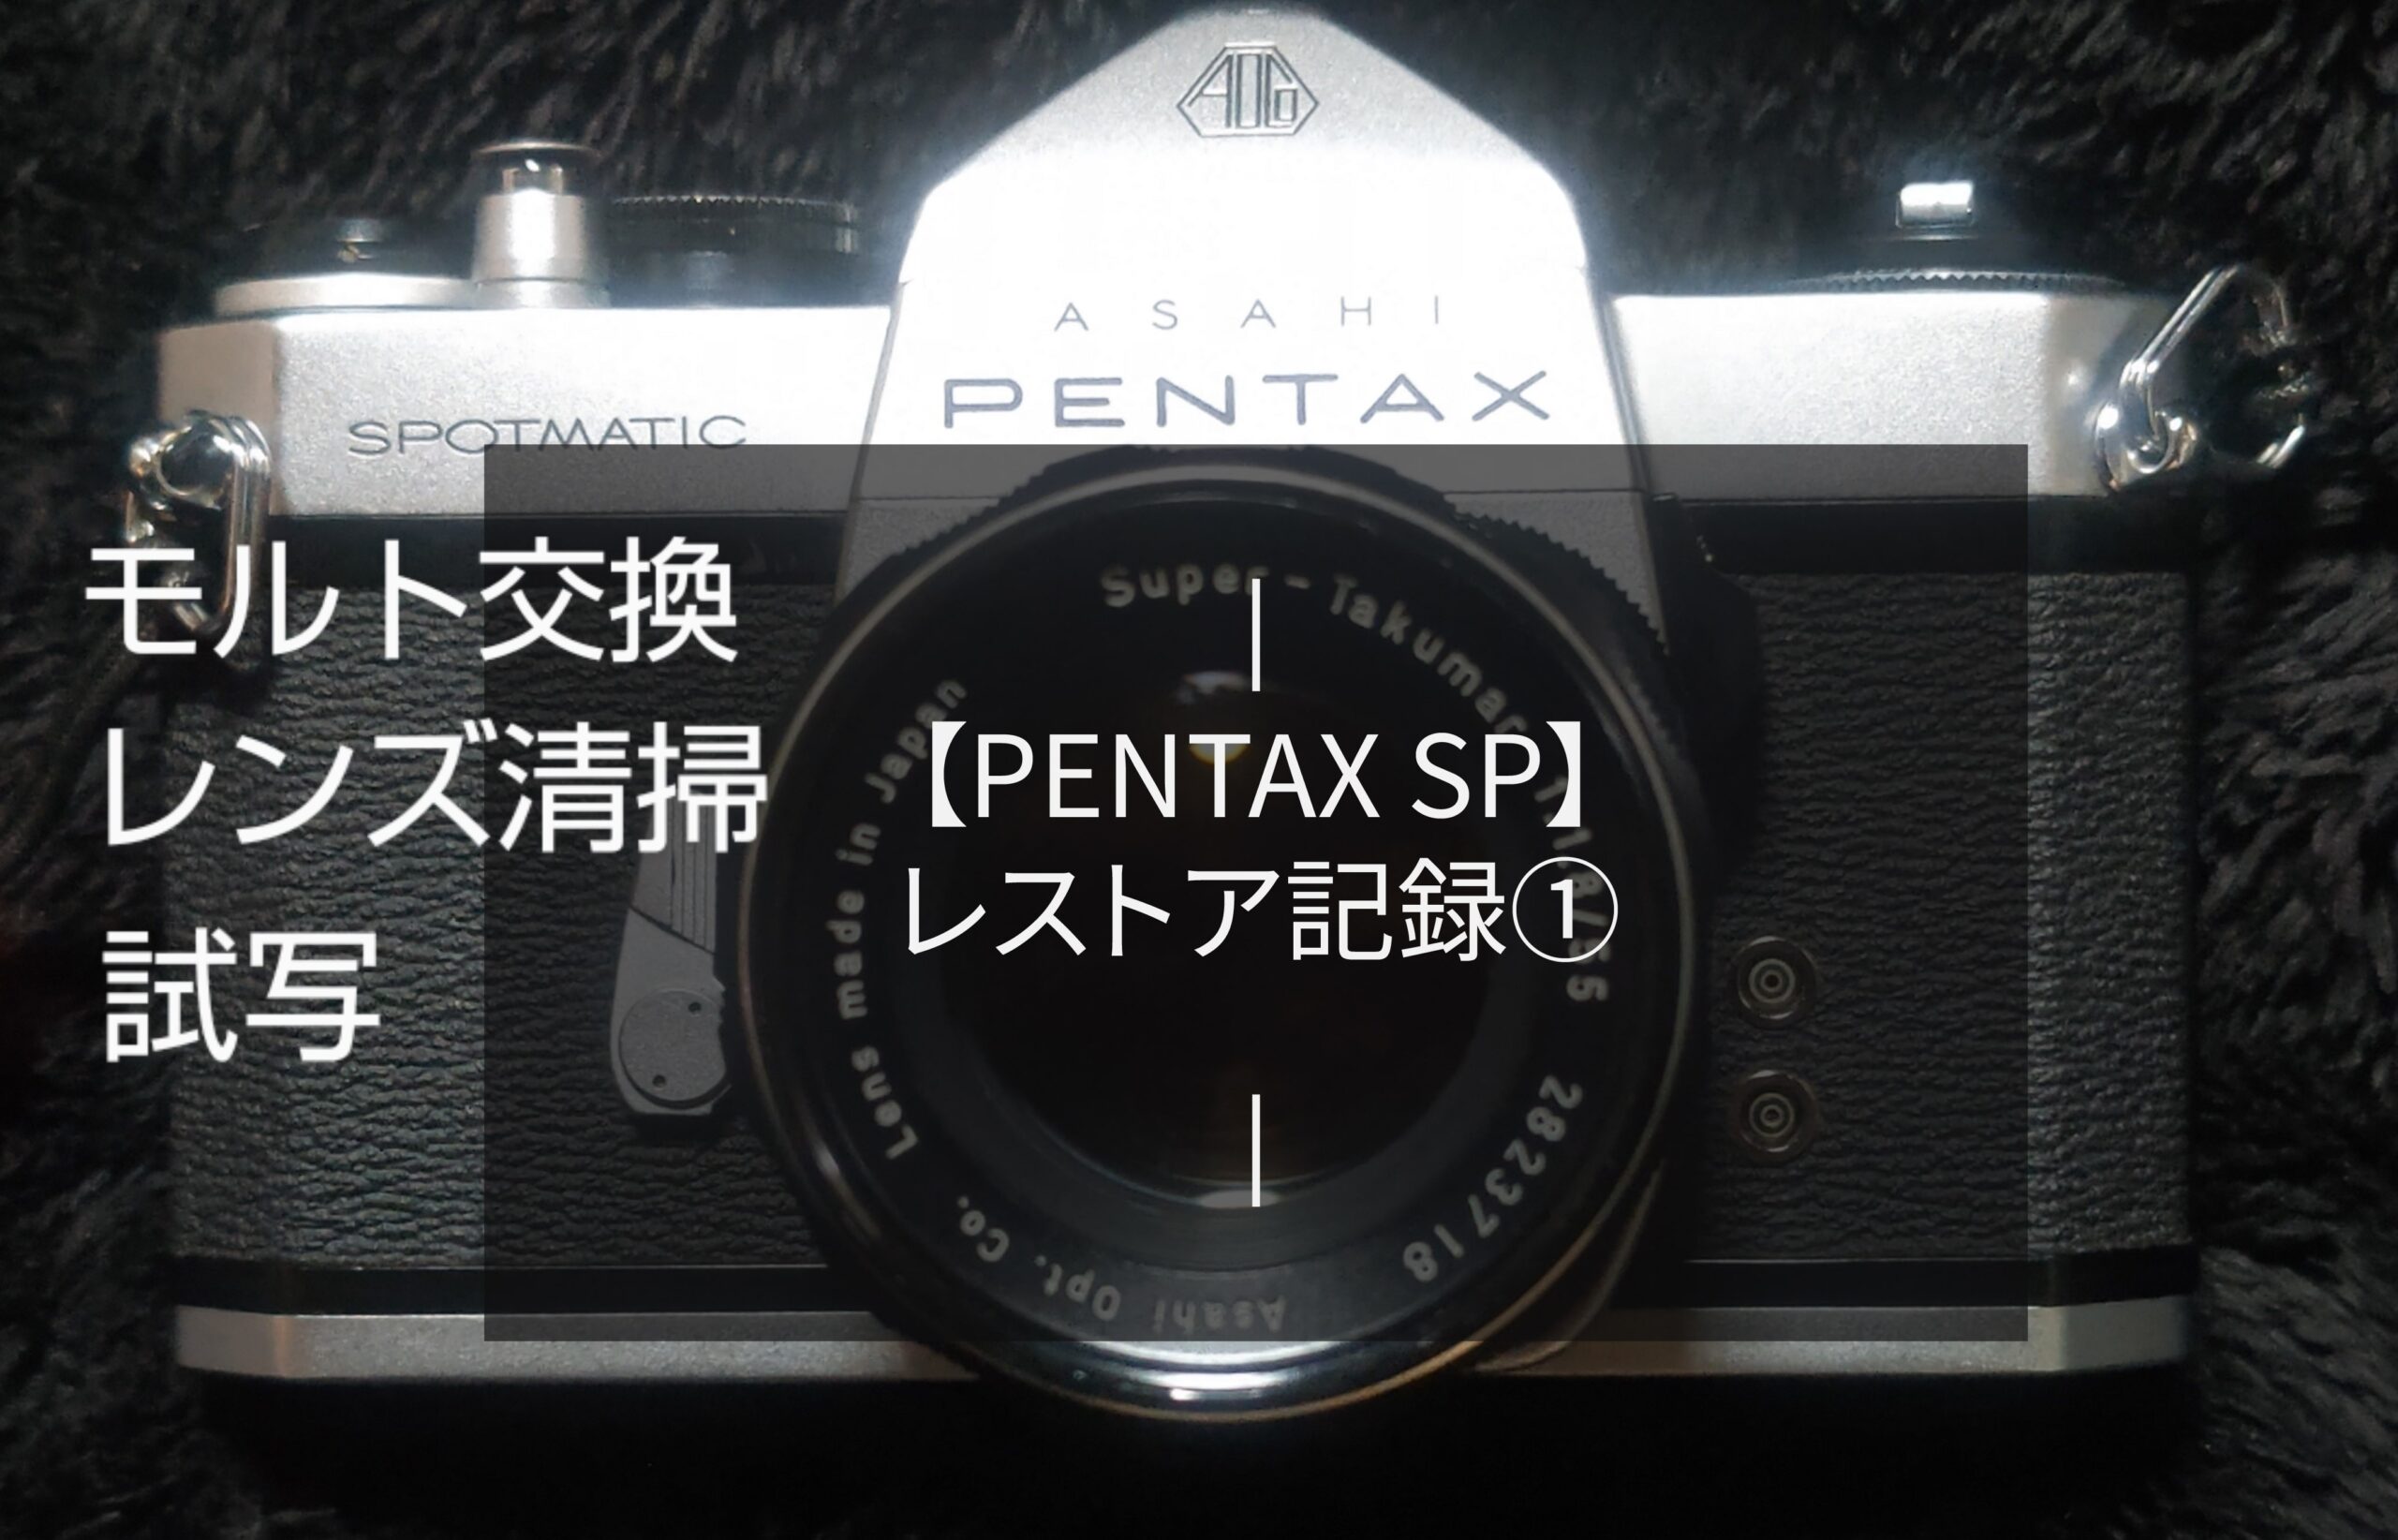 PENTAX SP】レストア記録① 【モルト交換、レンズ清掃、試写